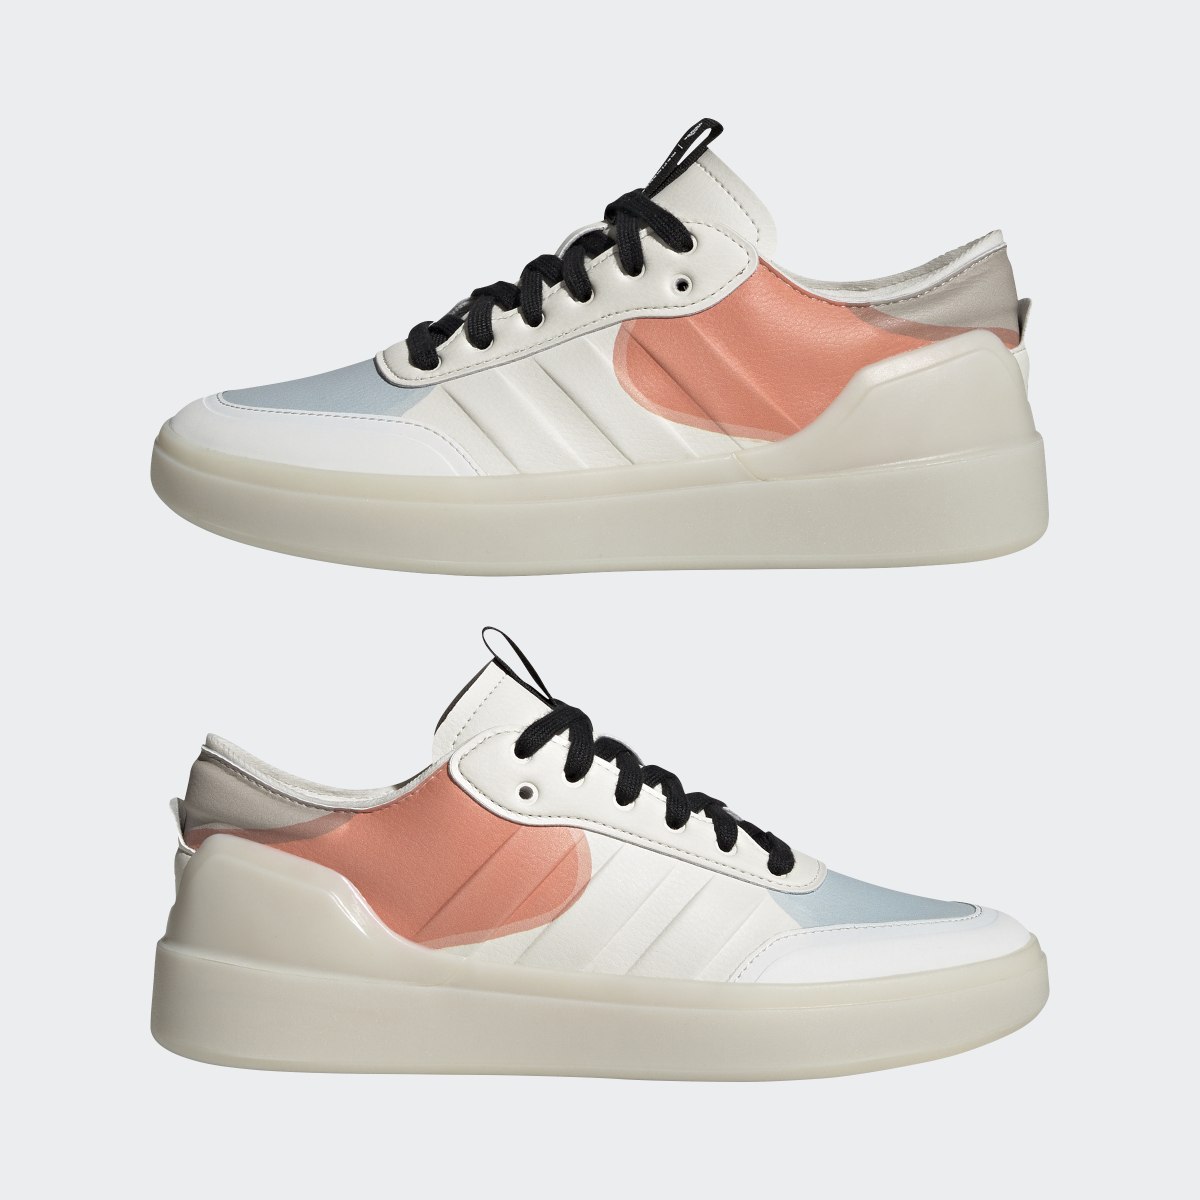 Adidas x Marimekko Court Revival Shoes. 8